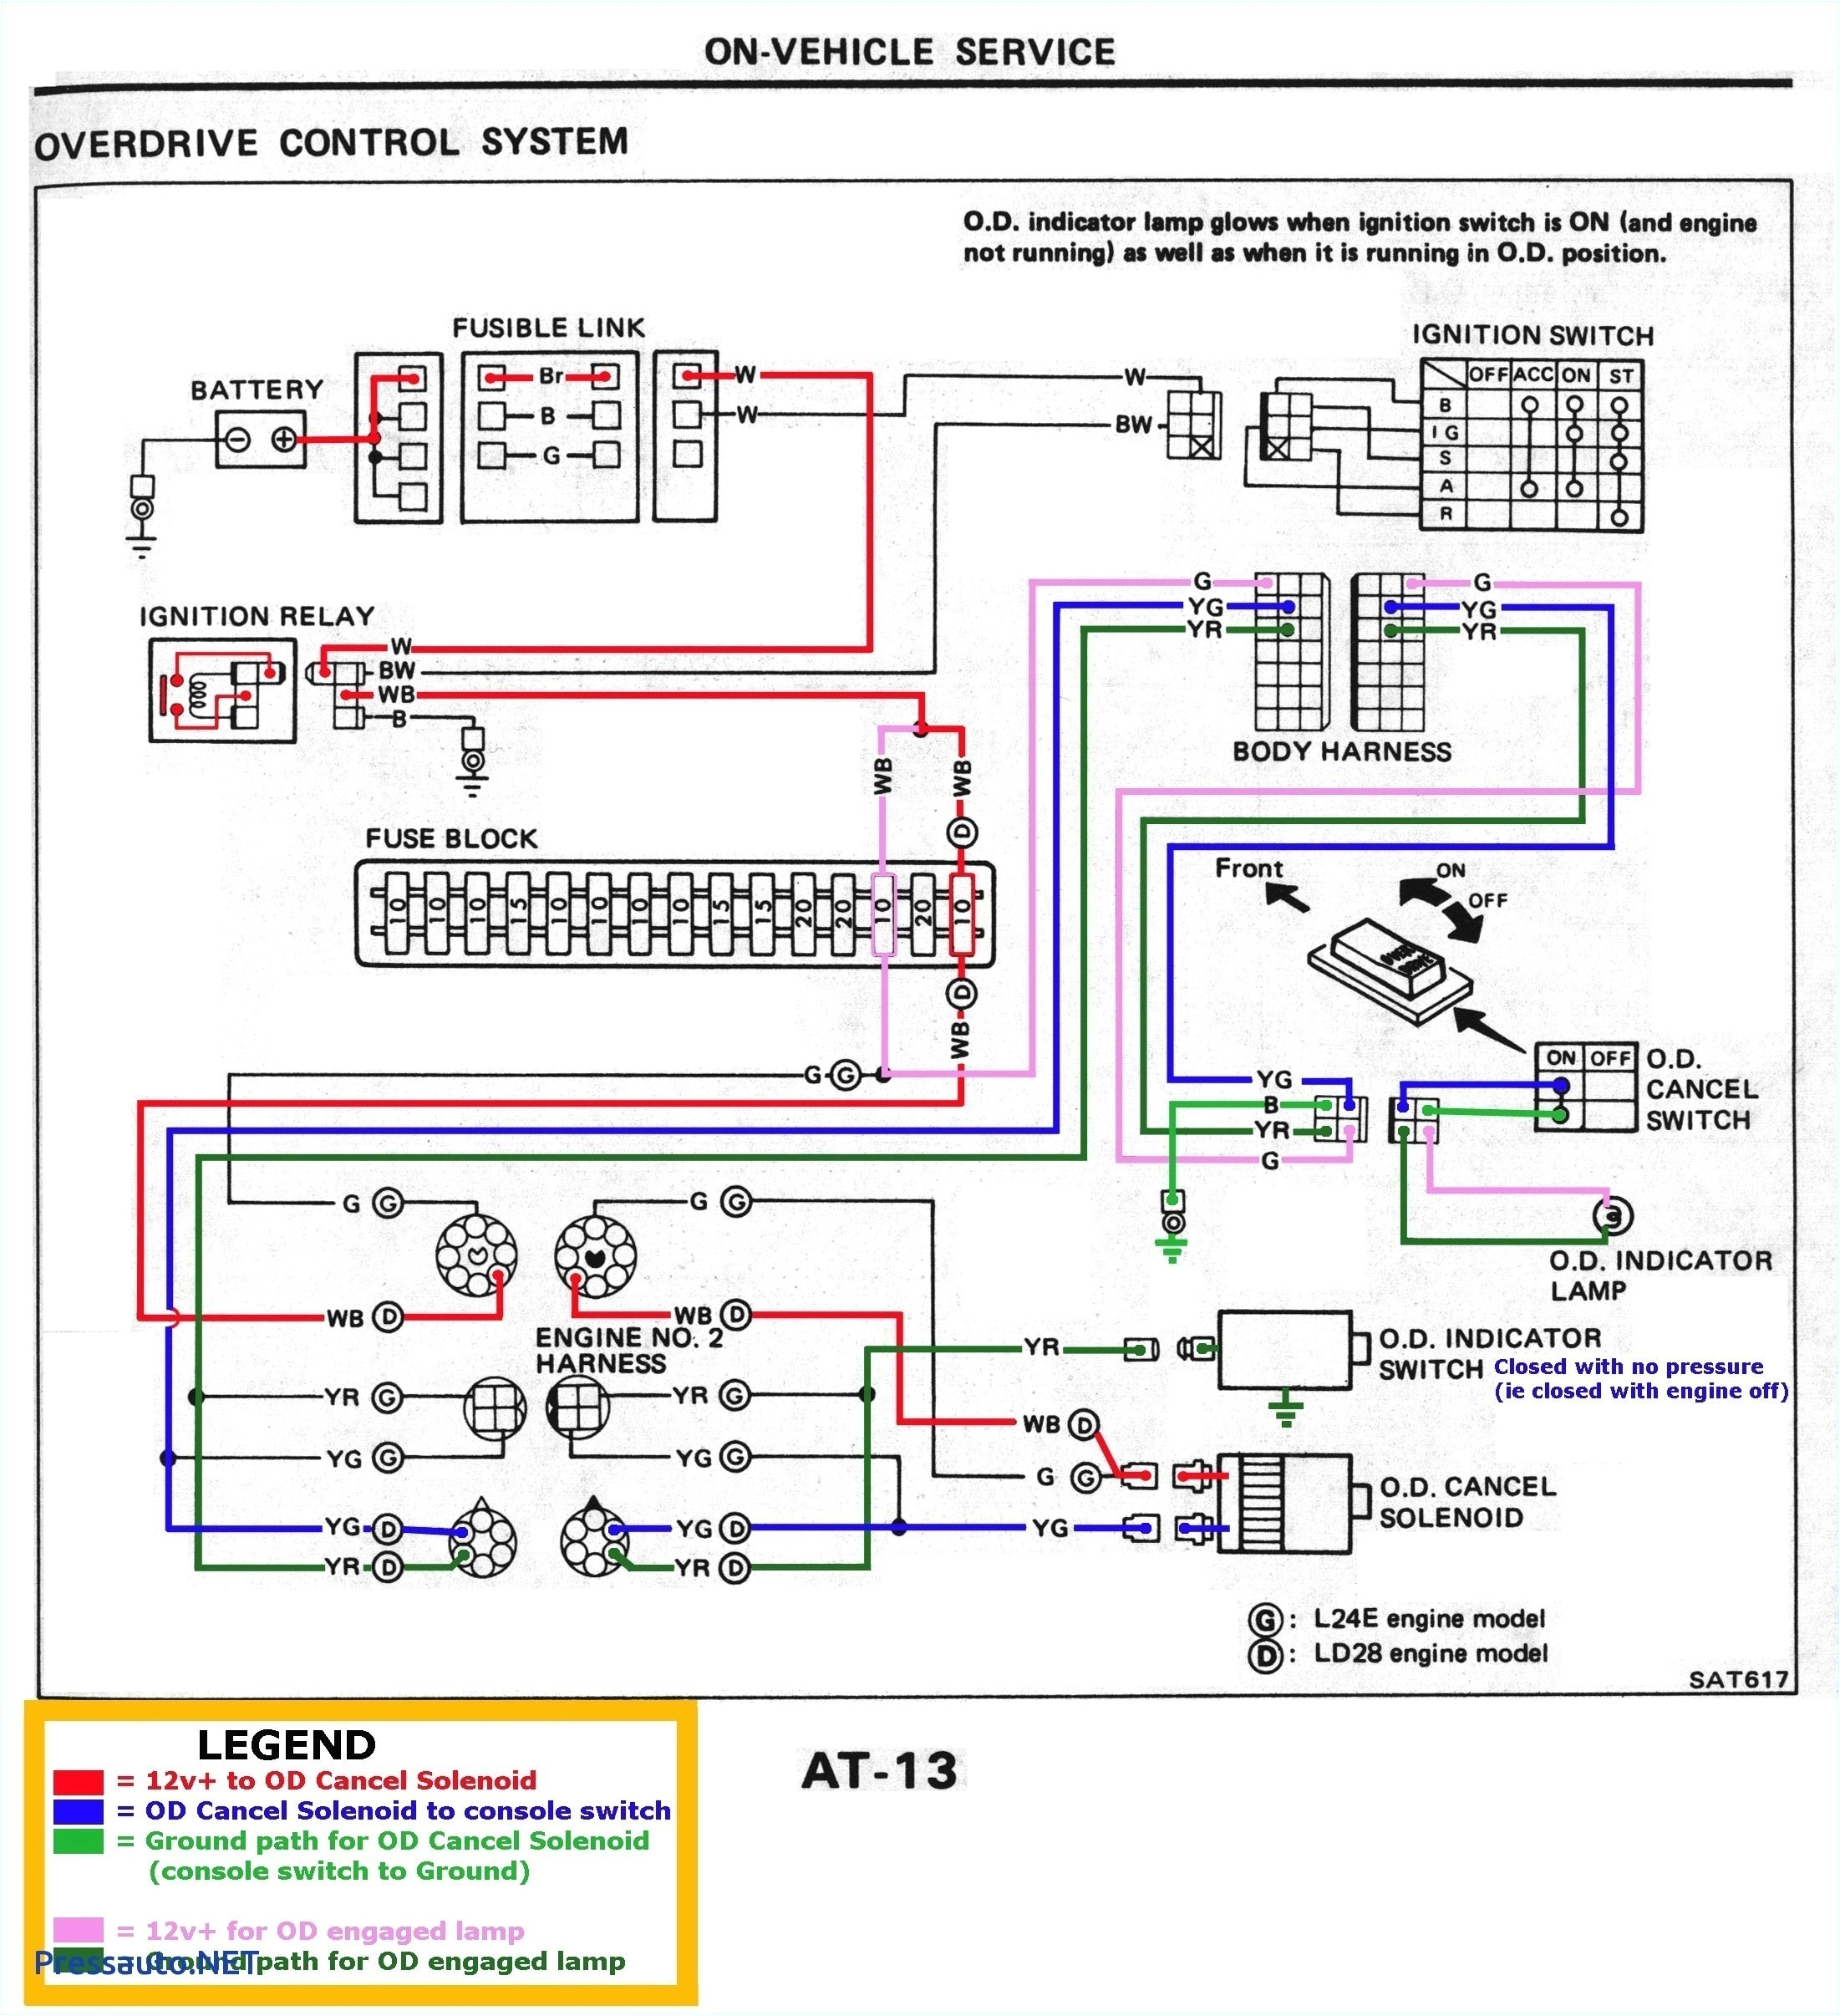 bmw e36 wiring diagrams blog wiring diagram bmw e36 wiring diagrams wiring diagrams mon bmw e36